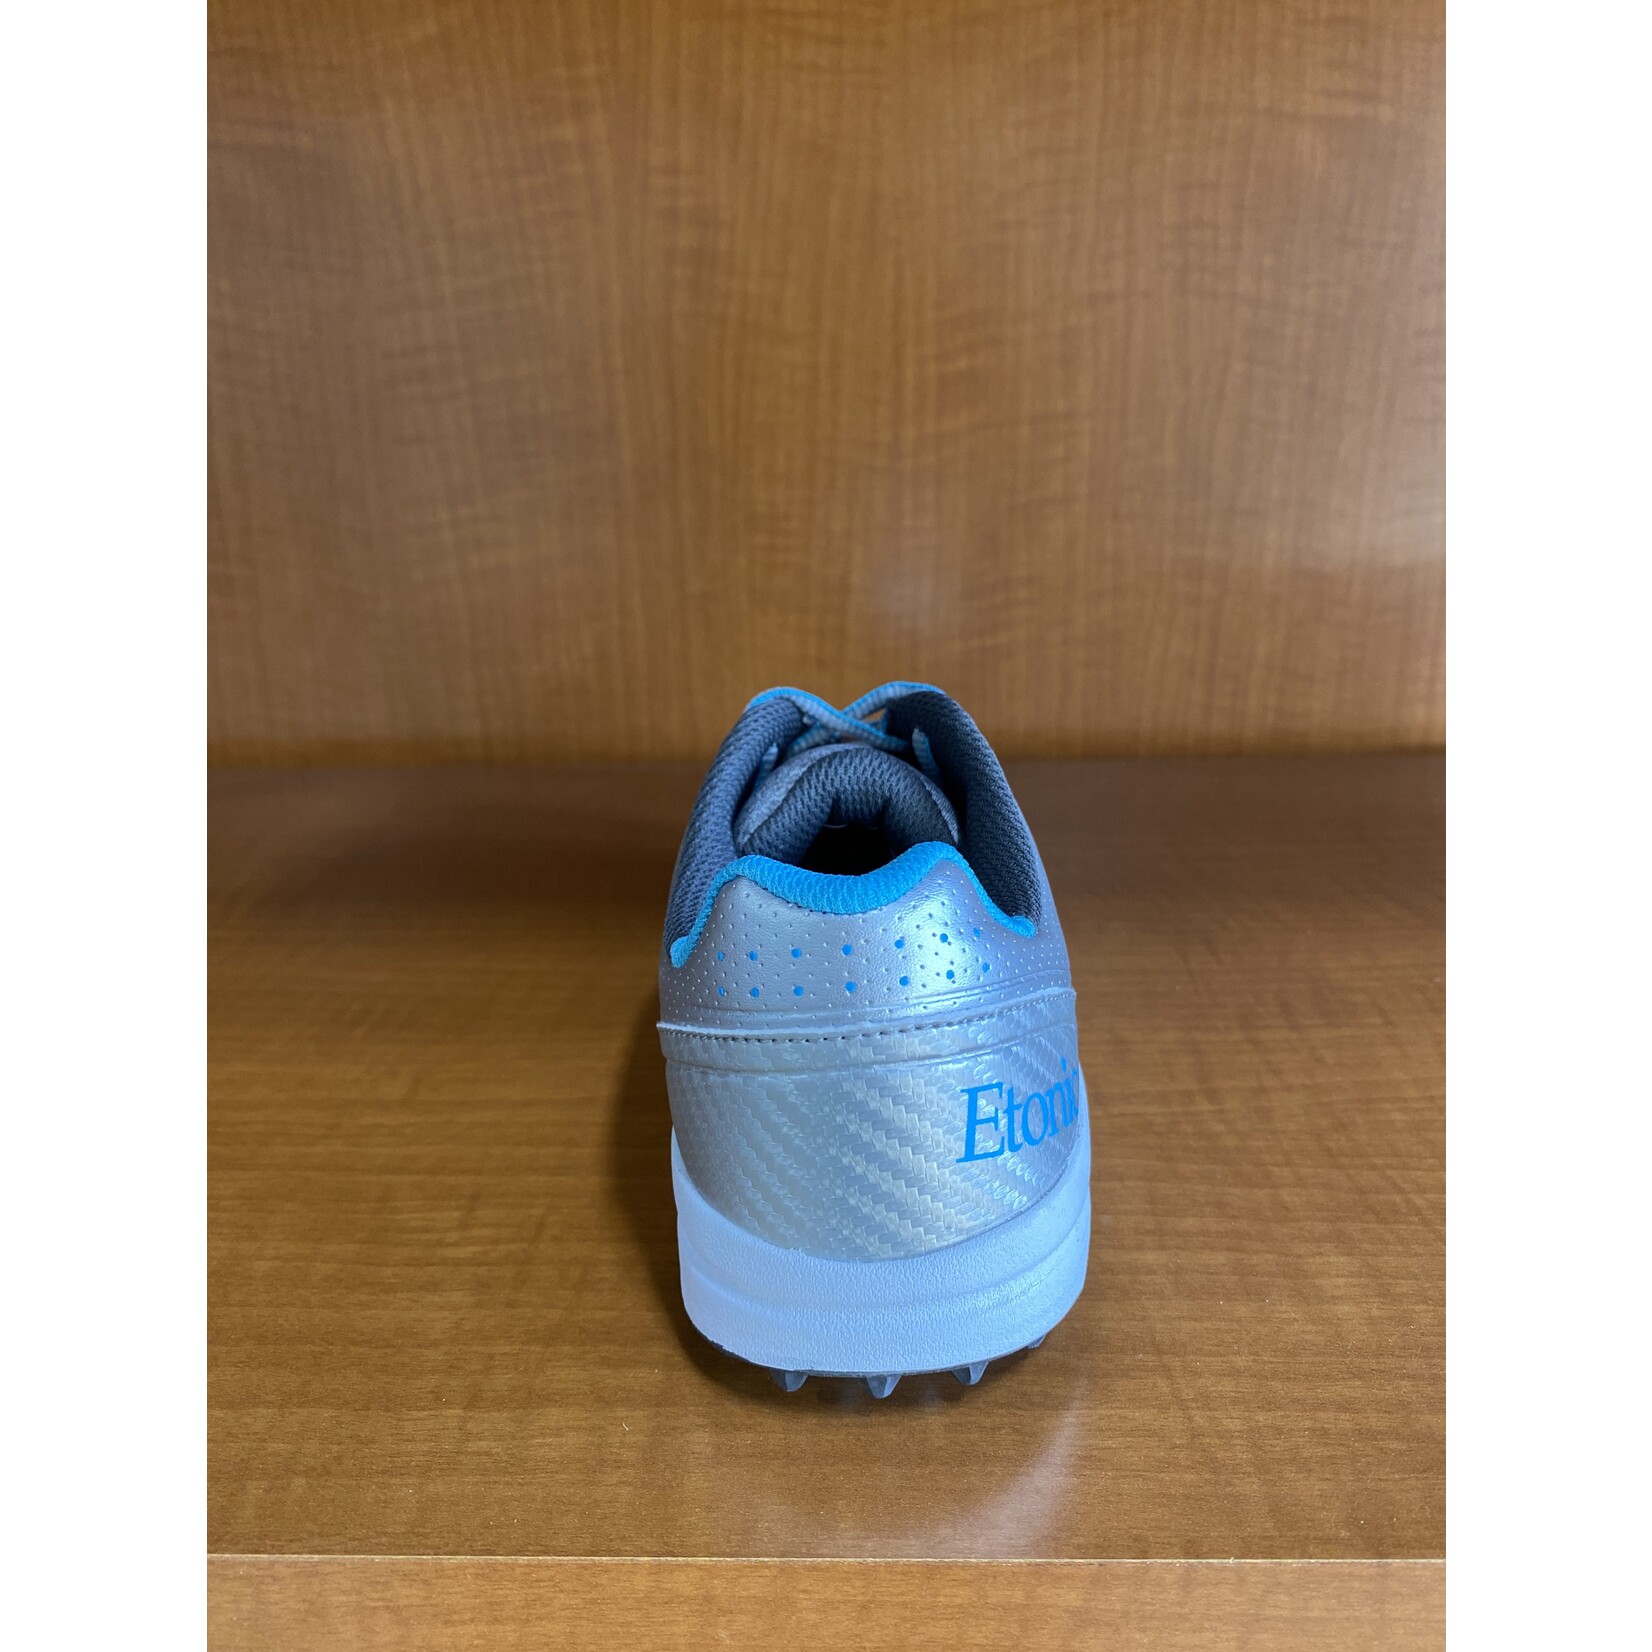 Etonic Golf Shoes (Ladies G-SOK, Teal and Grey) - Size9.5